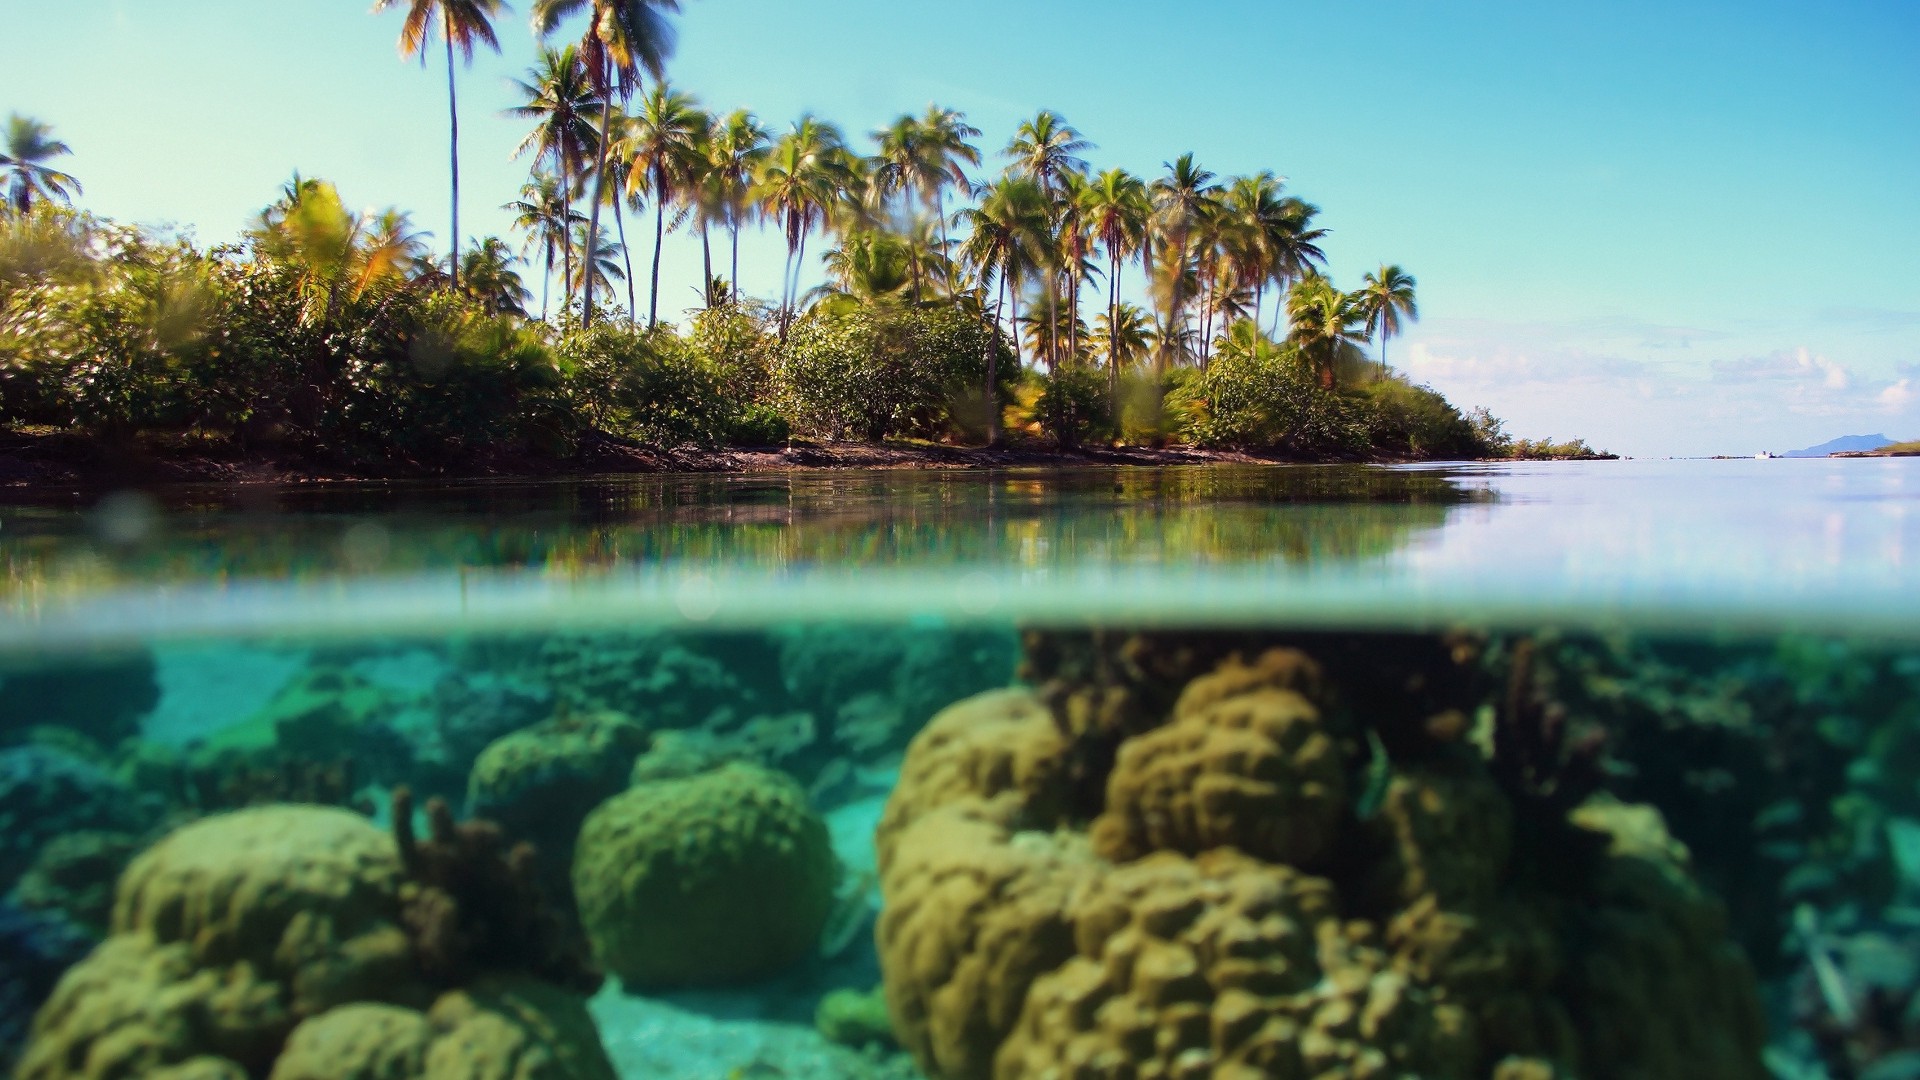 1920x1080 wallpapers: ヤシの木、島、水中、サンゴ、サンゴ礁、ライトブルー (image)